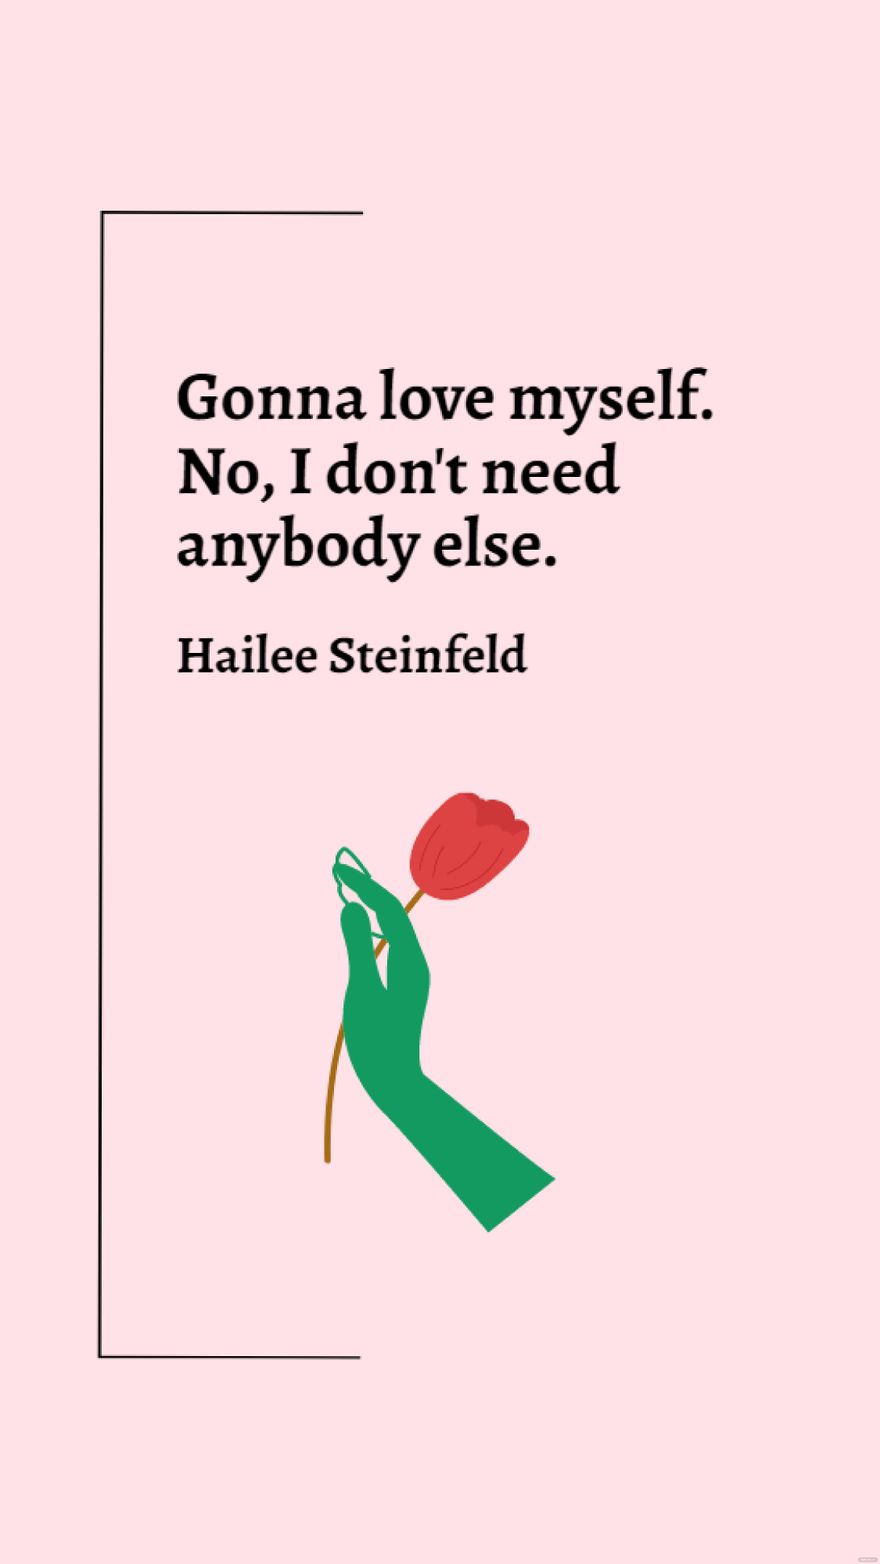 Free Hailee Steinfeld - Gonna love myself. No, I don't need anybody else. in JPG